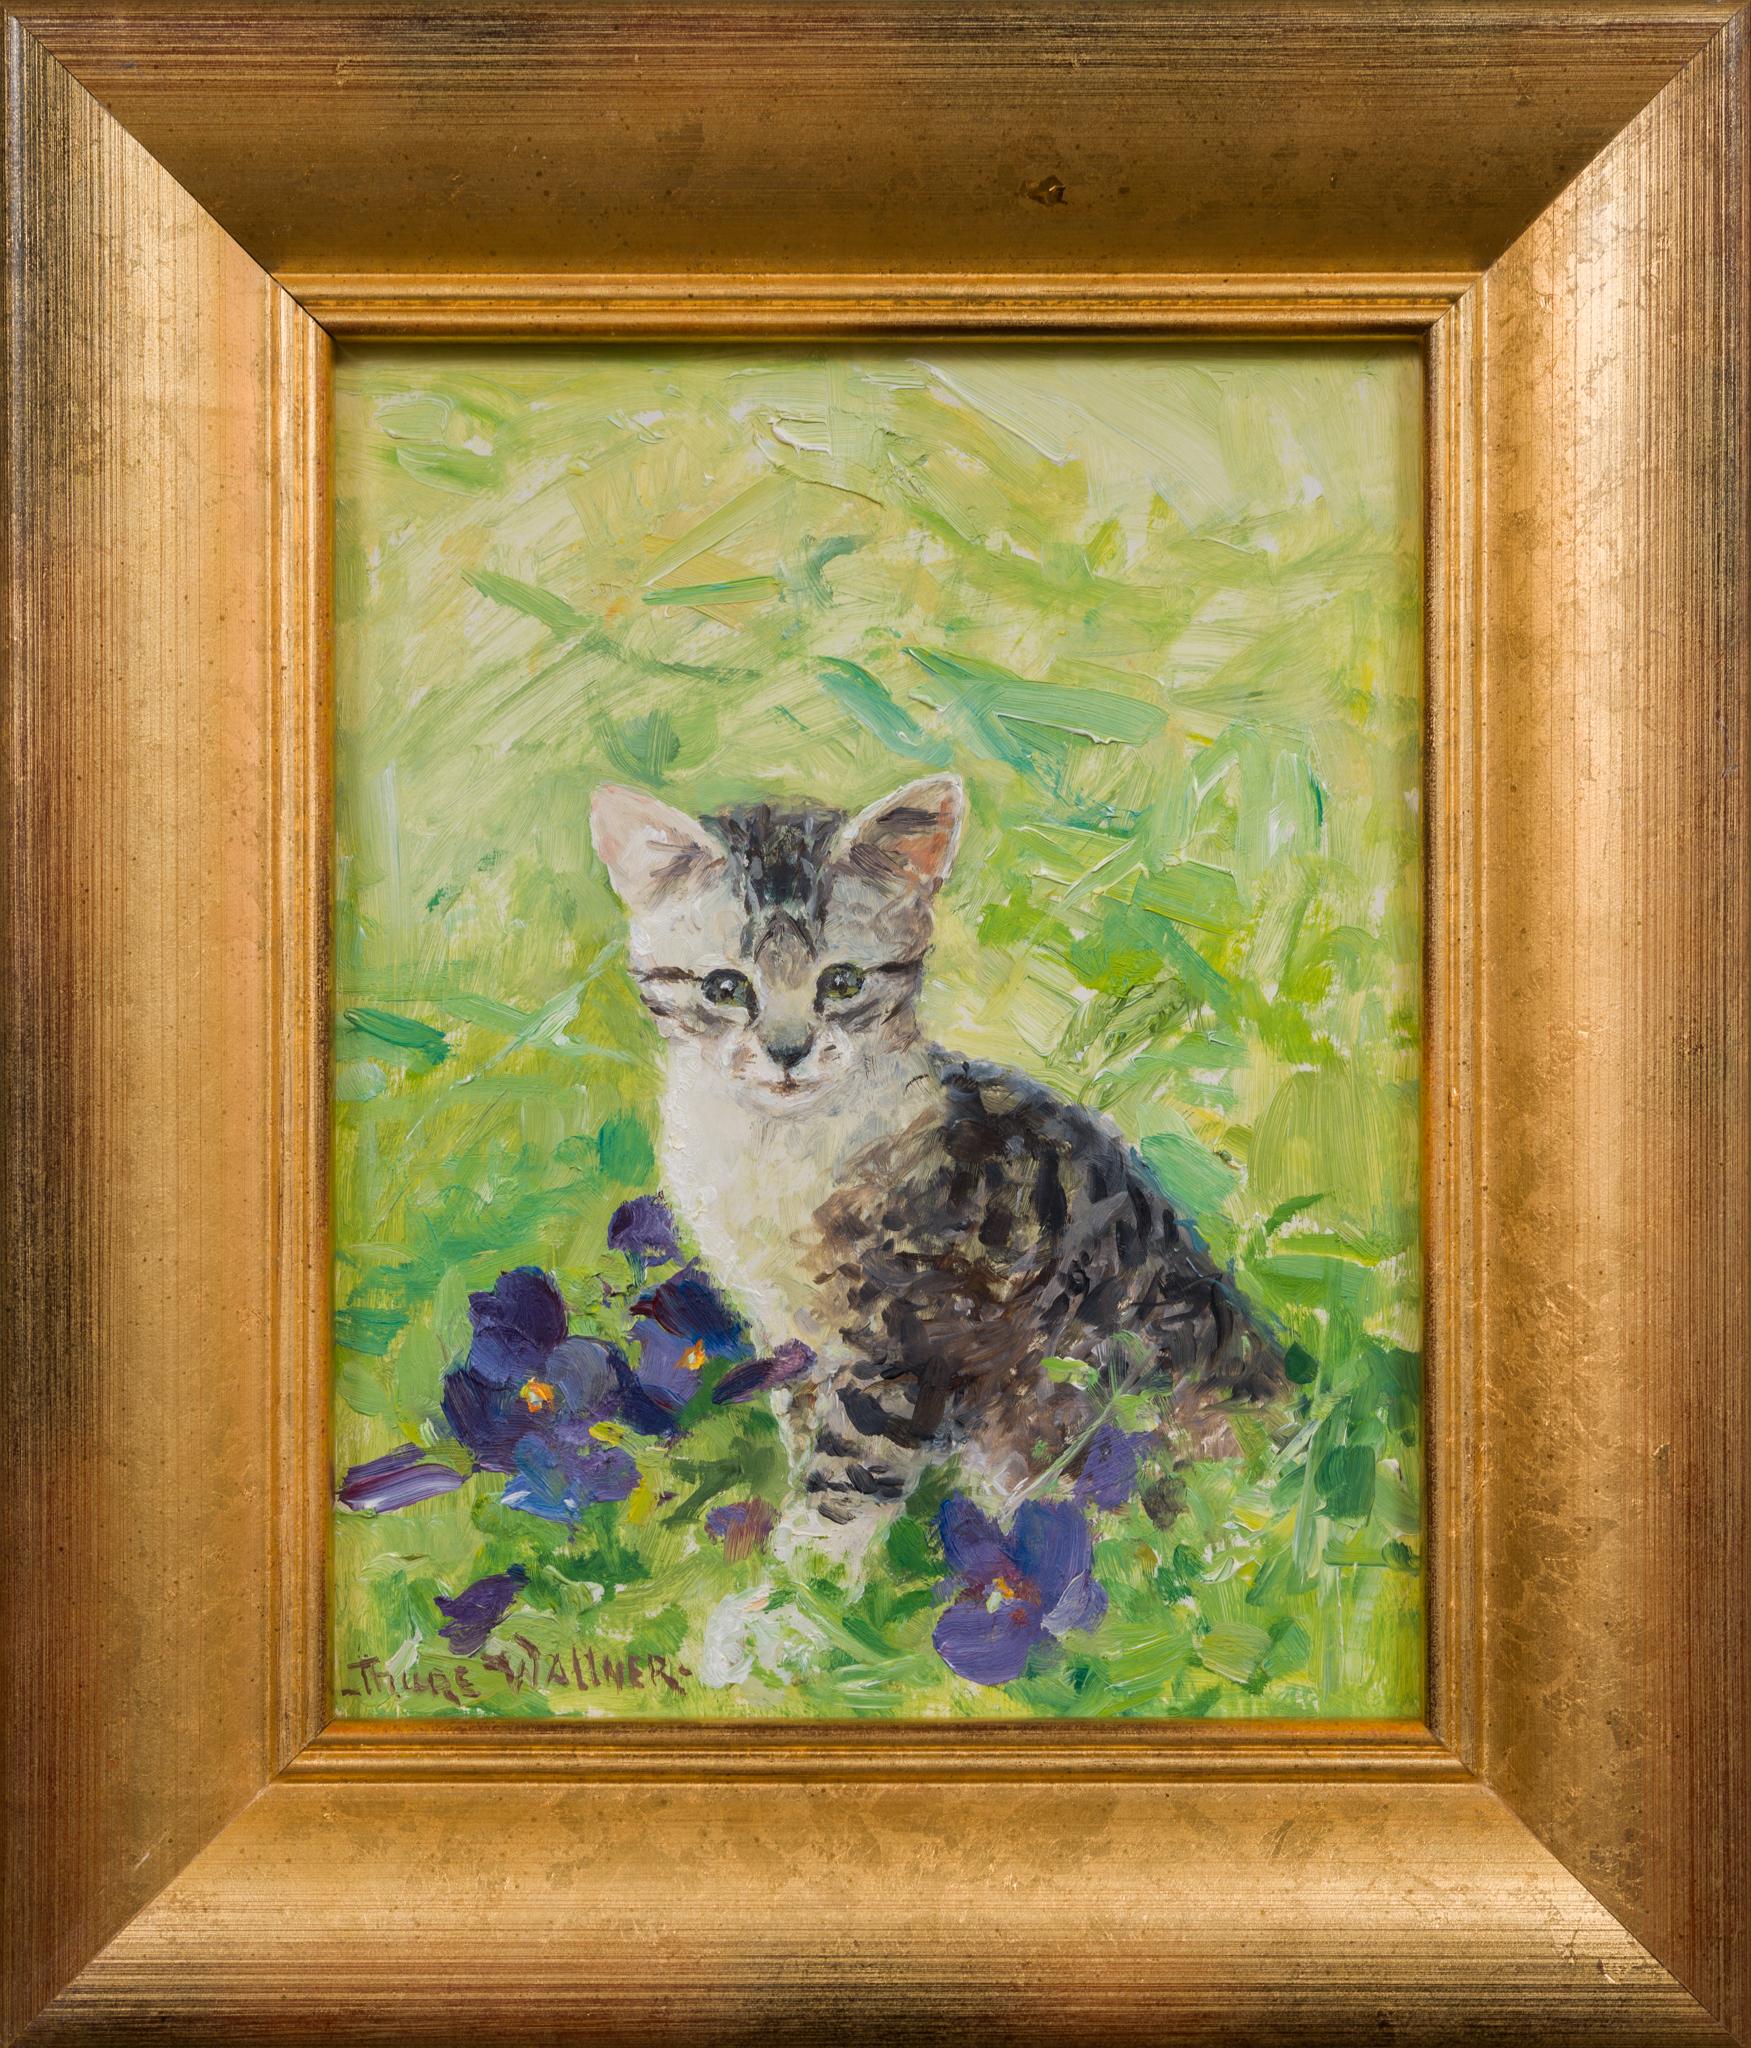 A Kitten Amongst the Blooms by Swedish Artist Thure Wallner